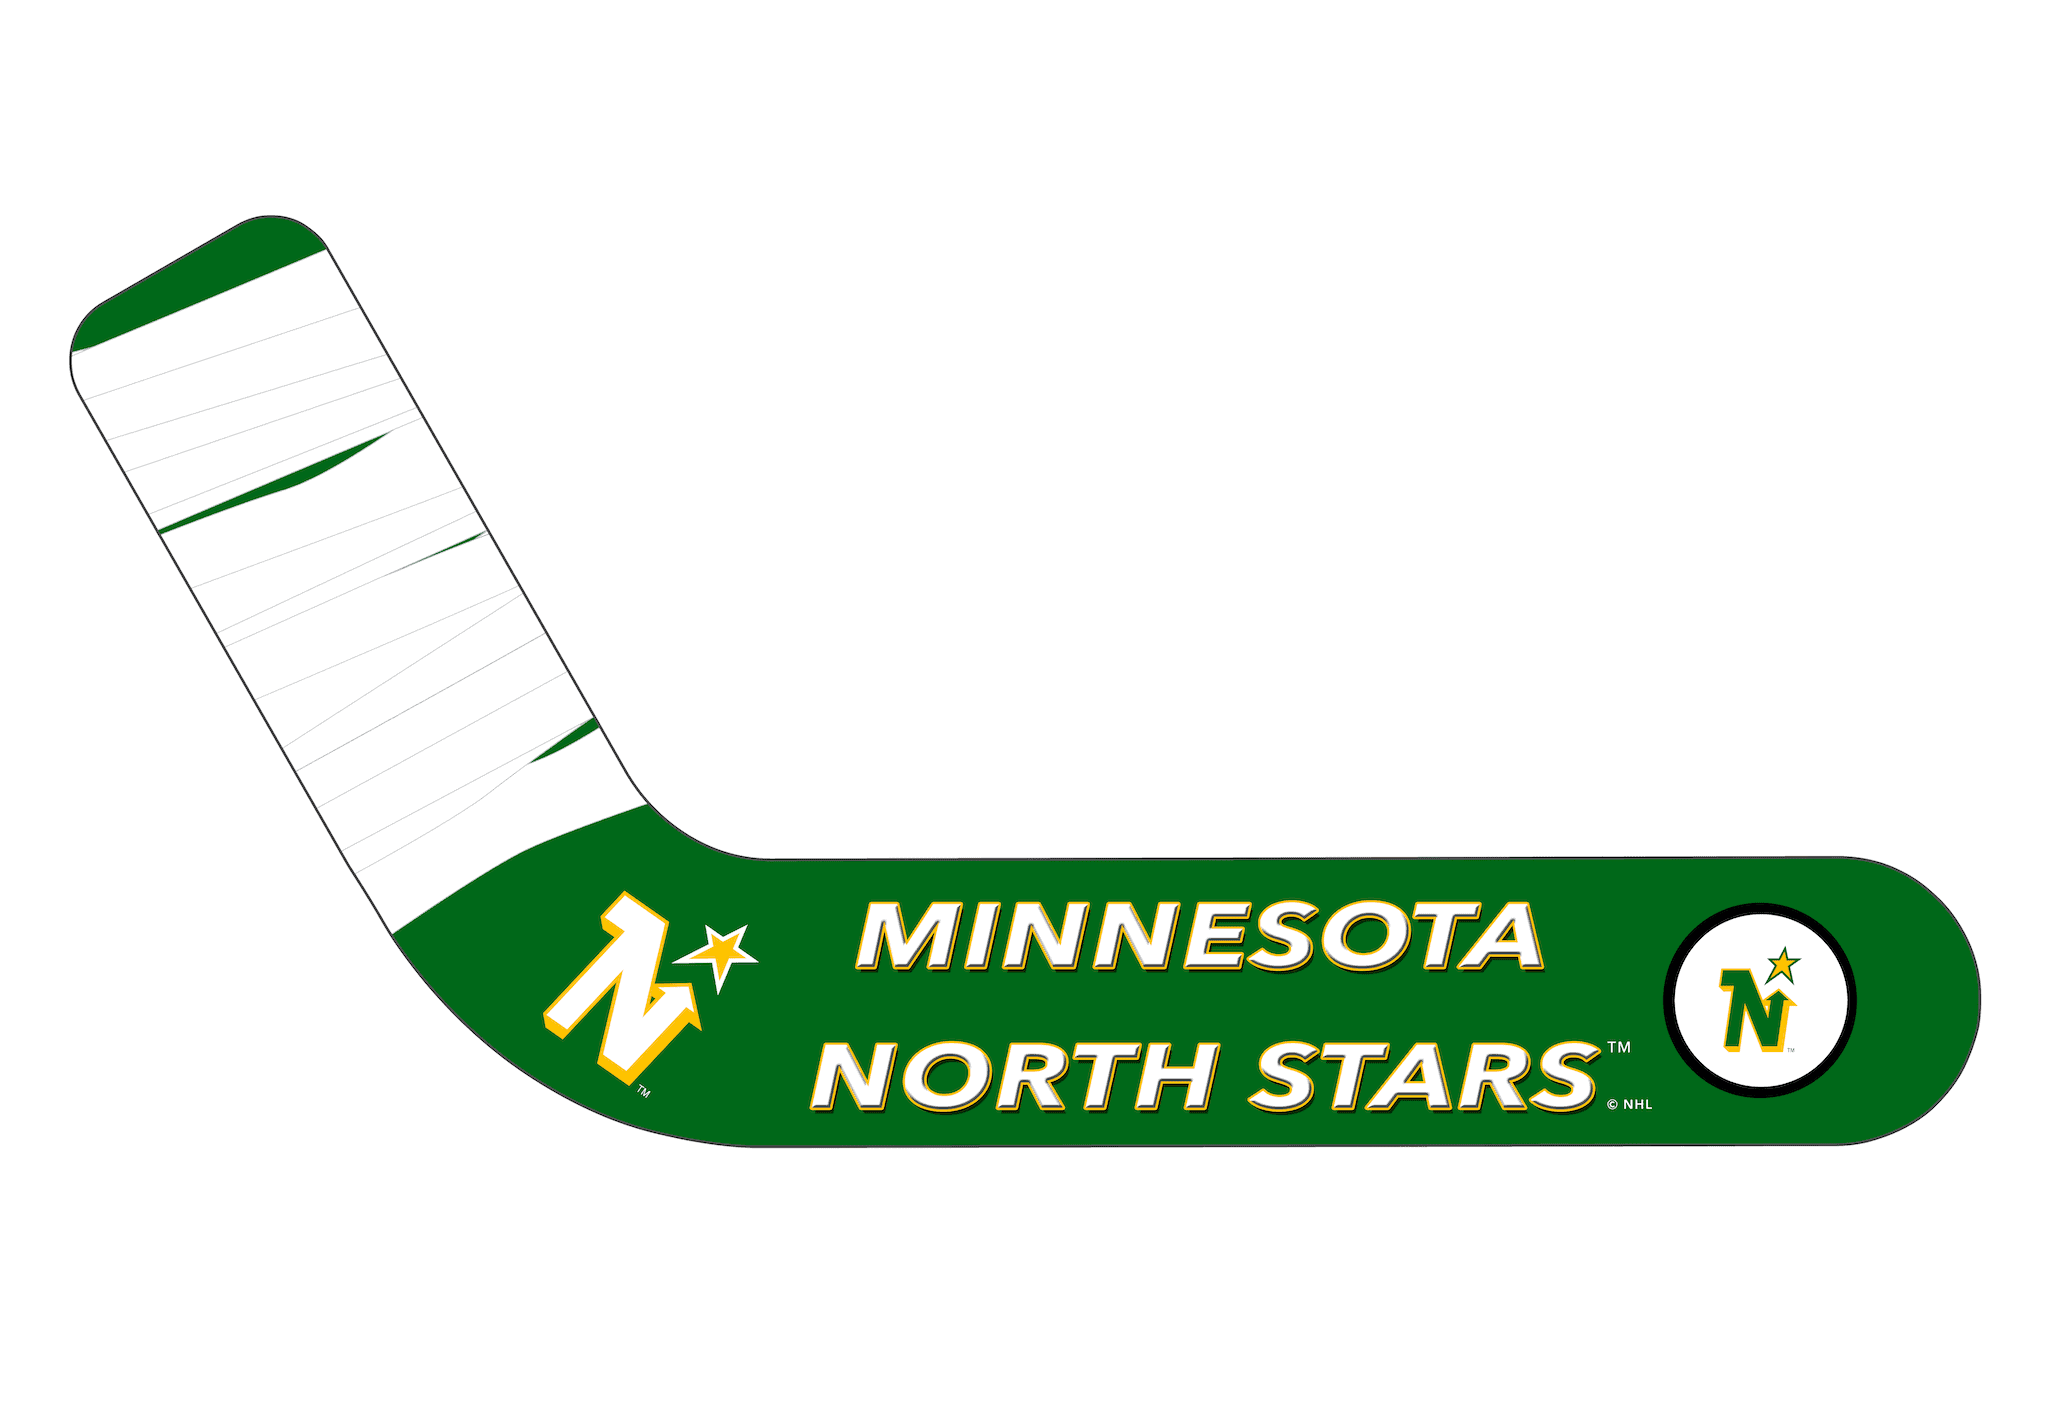 NHL Minnesota North Stars 1967-1968 Breakaway Vintage Replica Jersey